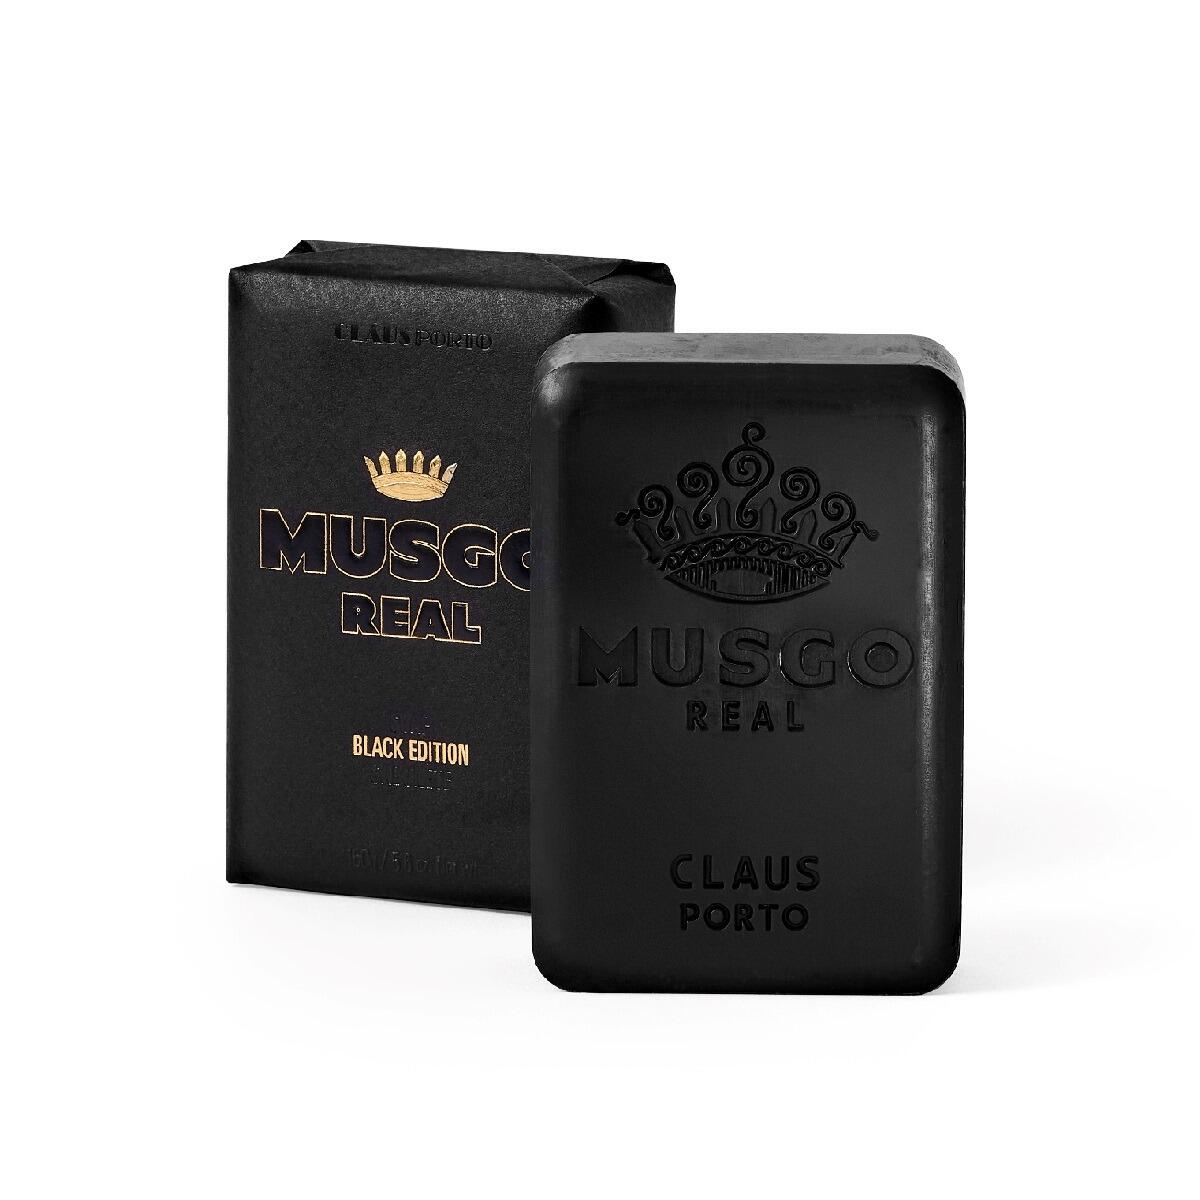 Musgo Real Men's Body Soap Black Edition 160g